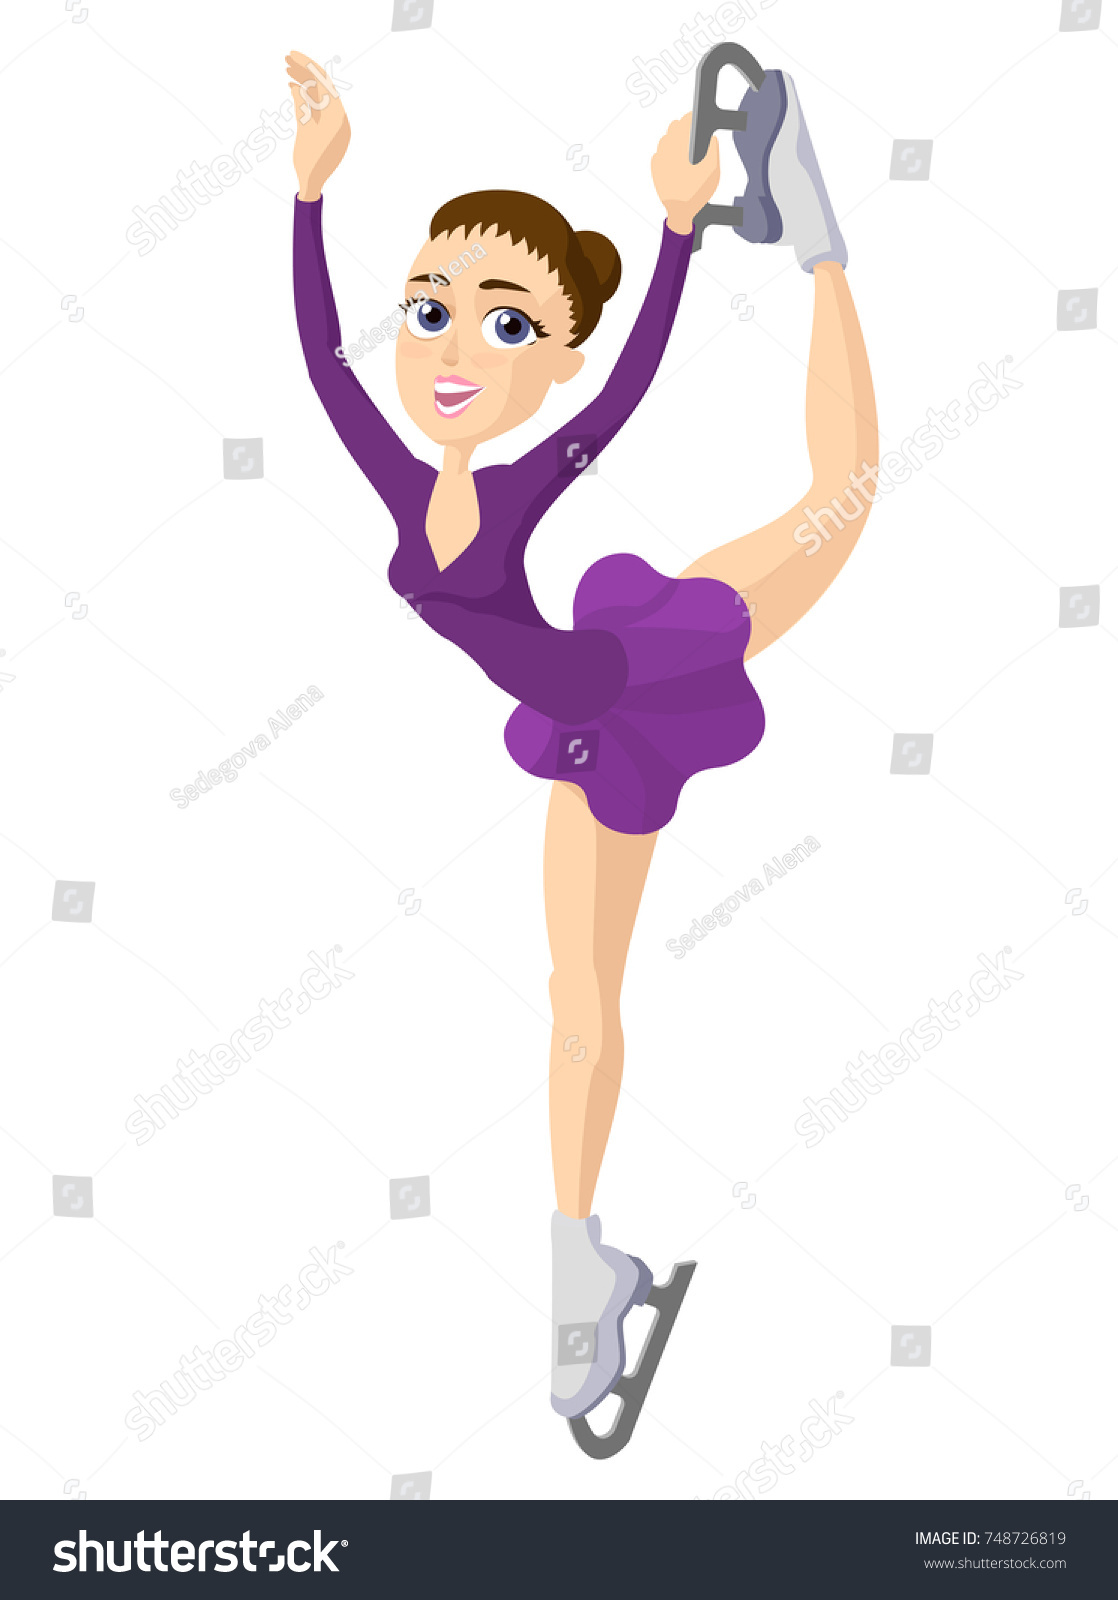 Figure Skating Girl Cartoon Skate Female: стоковая векторная графика (без л...